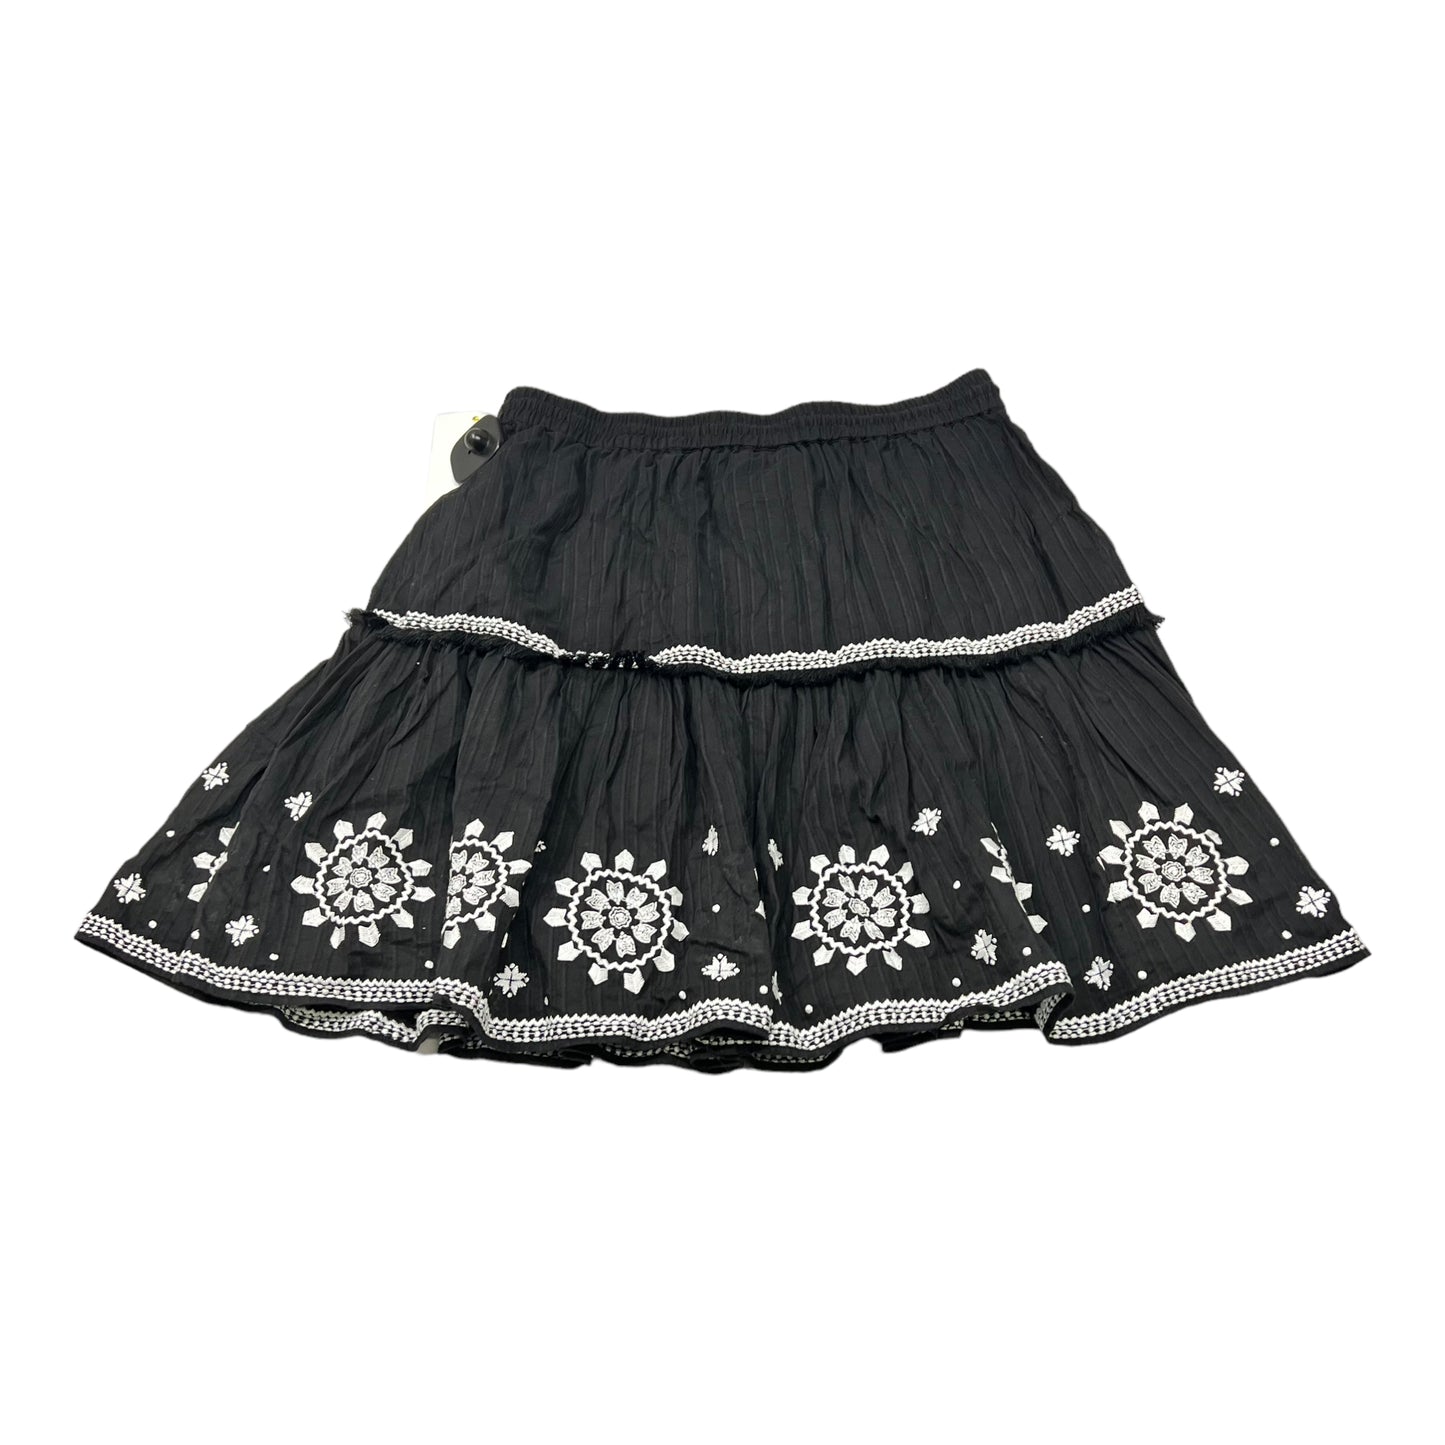 Skirt Designer By Kate Spade  Size: S